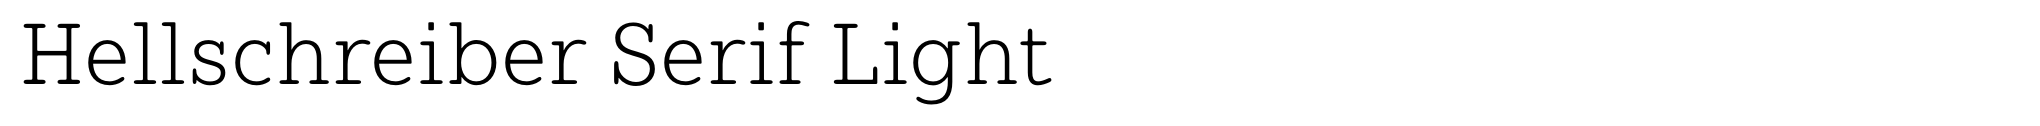 Hellschreiber Serif Light image